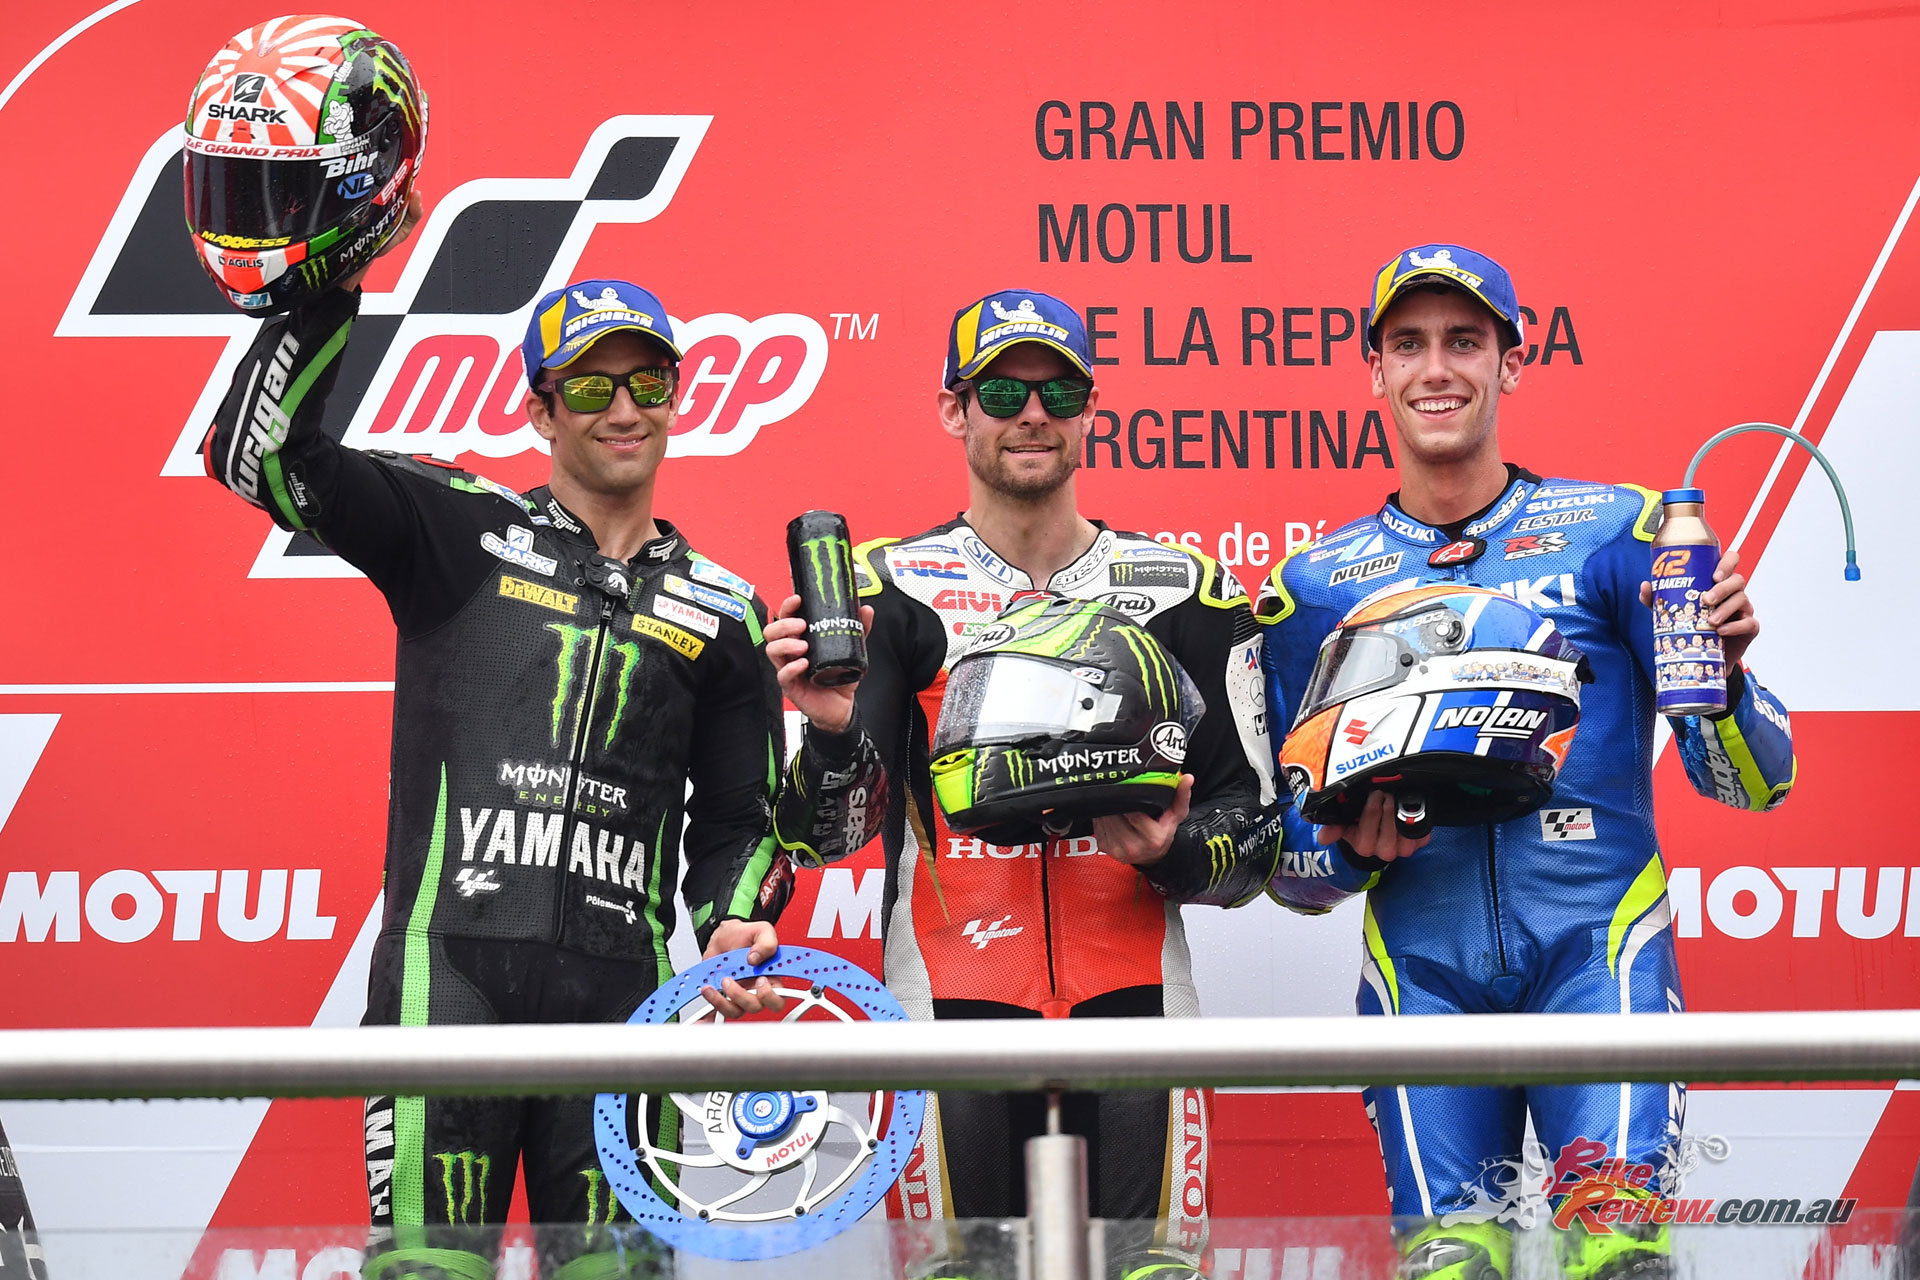 Crutchlow tops the Argentina MotoGP podium